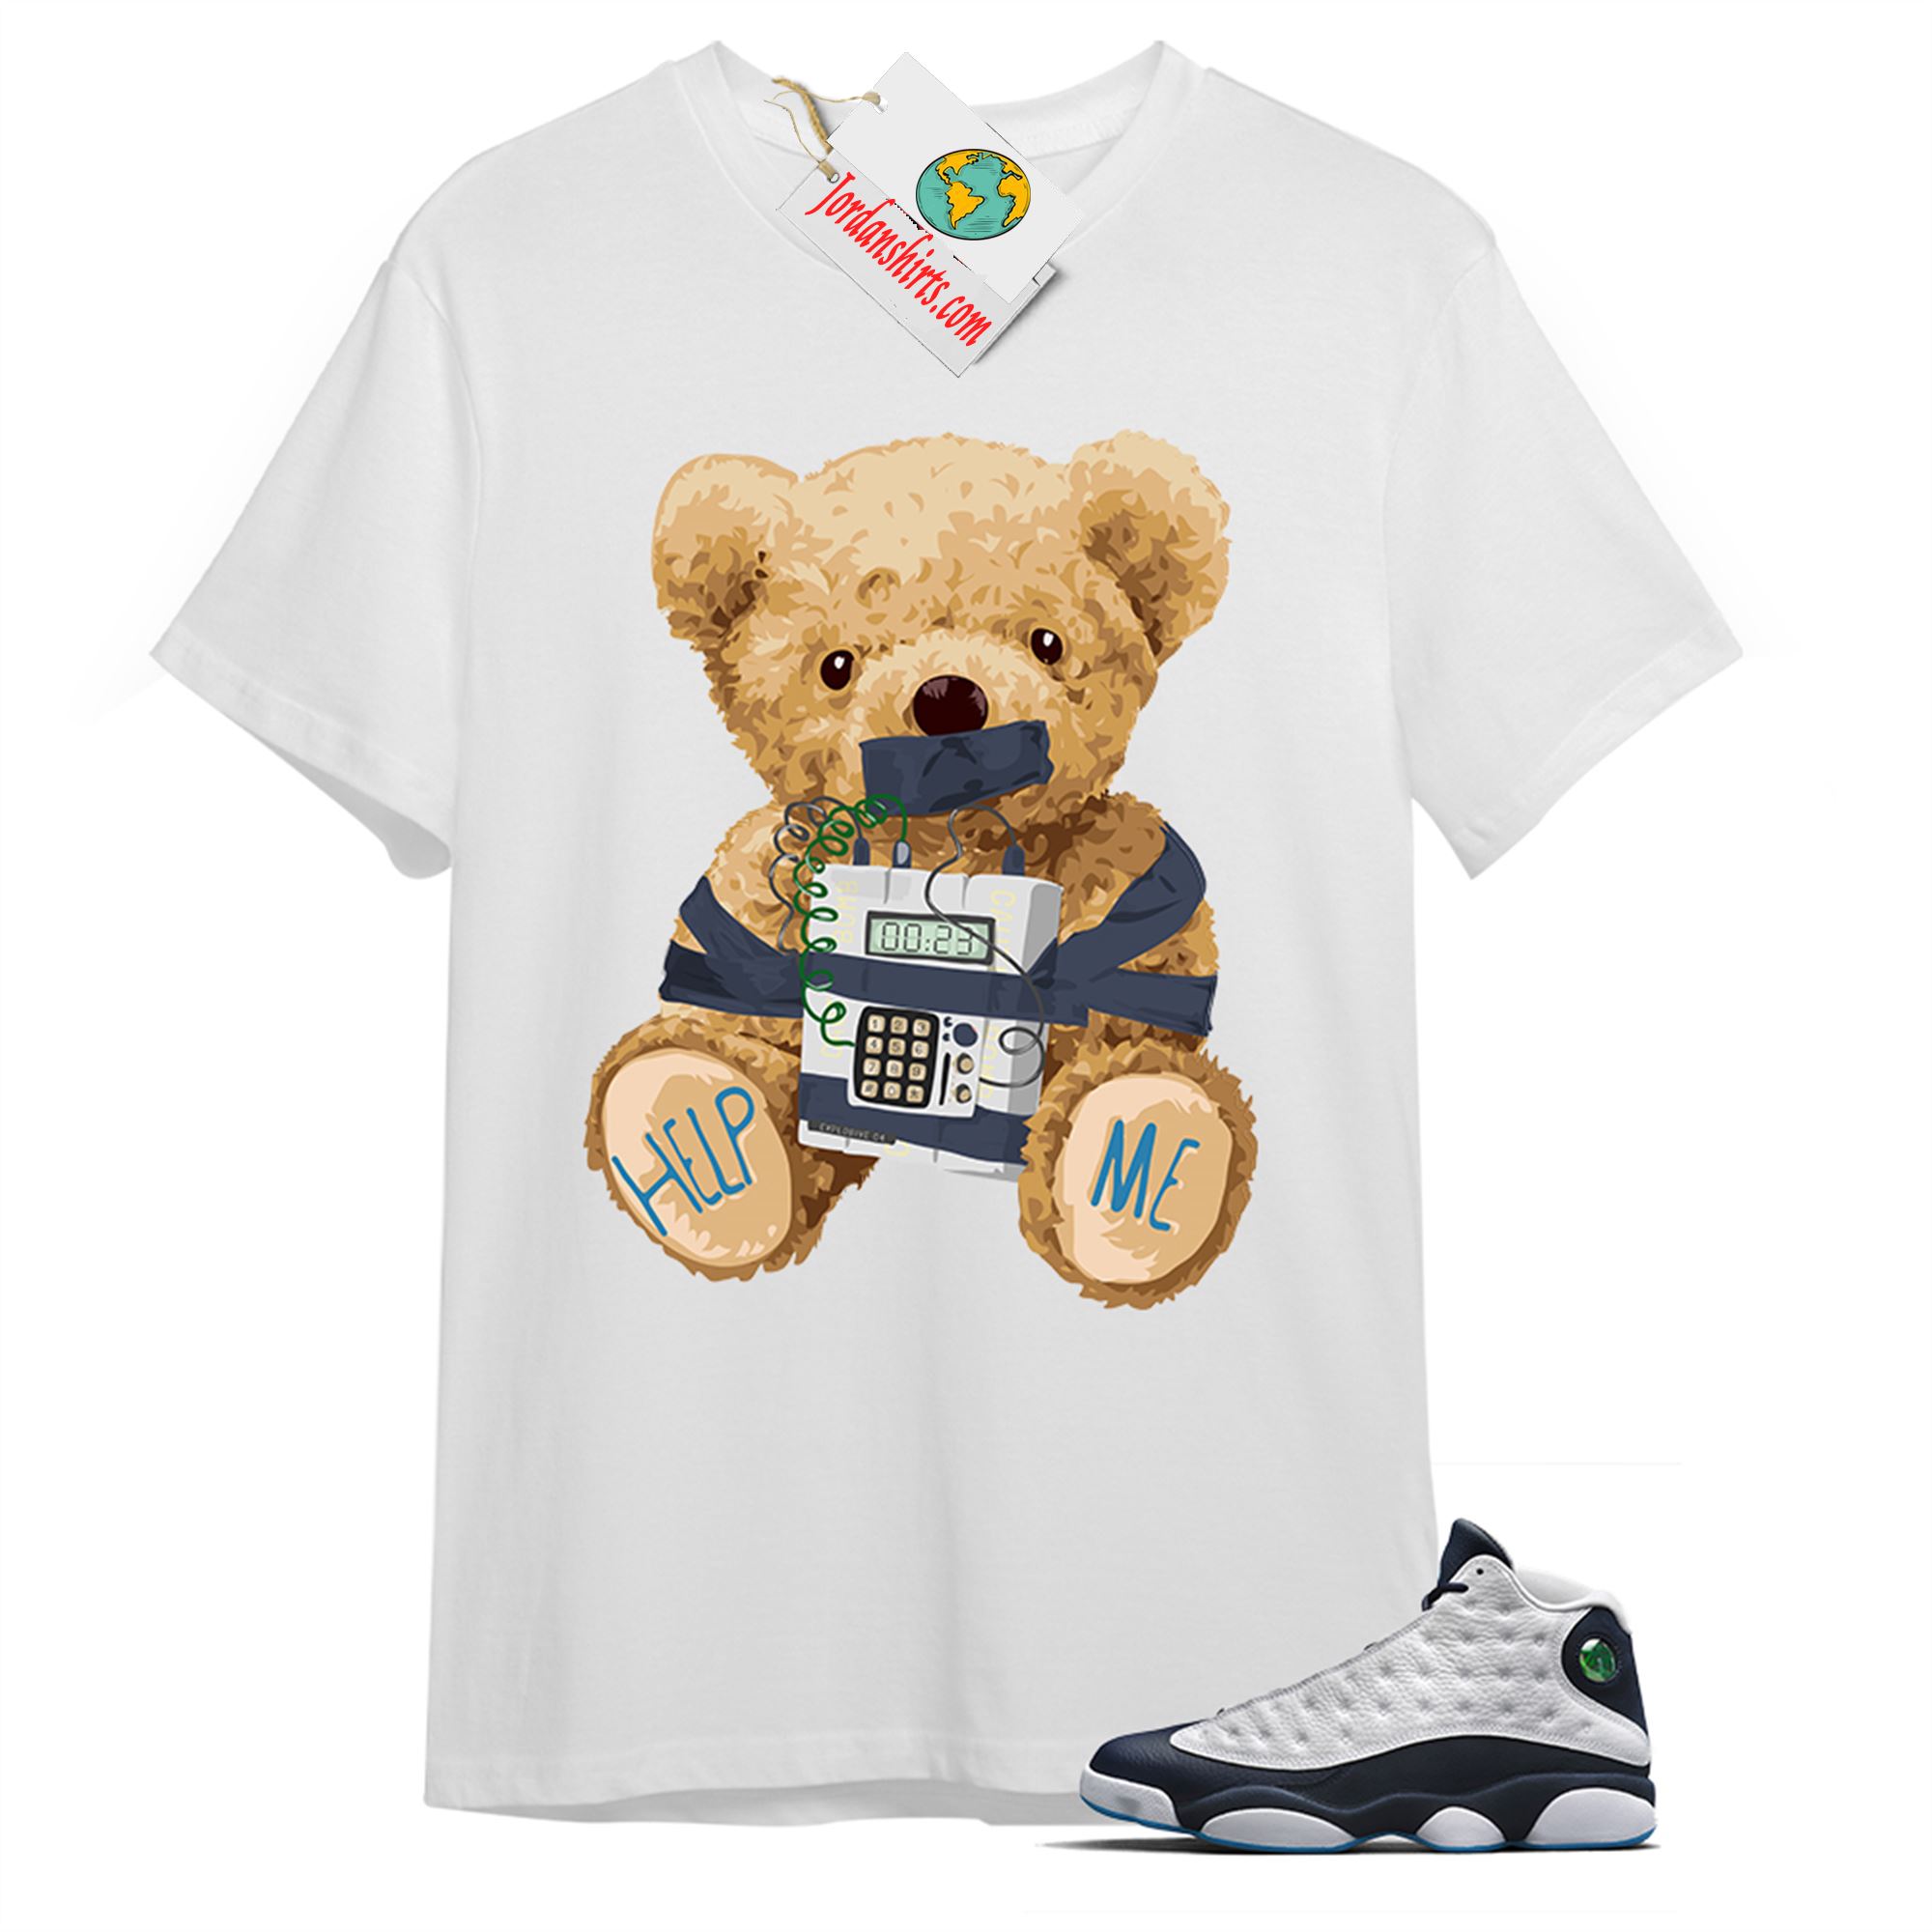 Jordan 13 Shirt, Teddy Bear Bomb White T-shirt Air Jordan 13 Obsidian 13s Size Up To 5xl